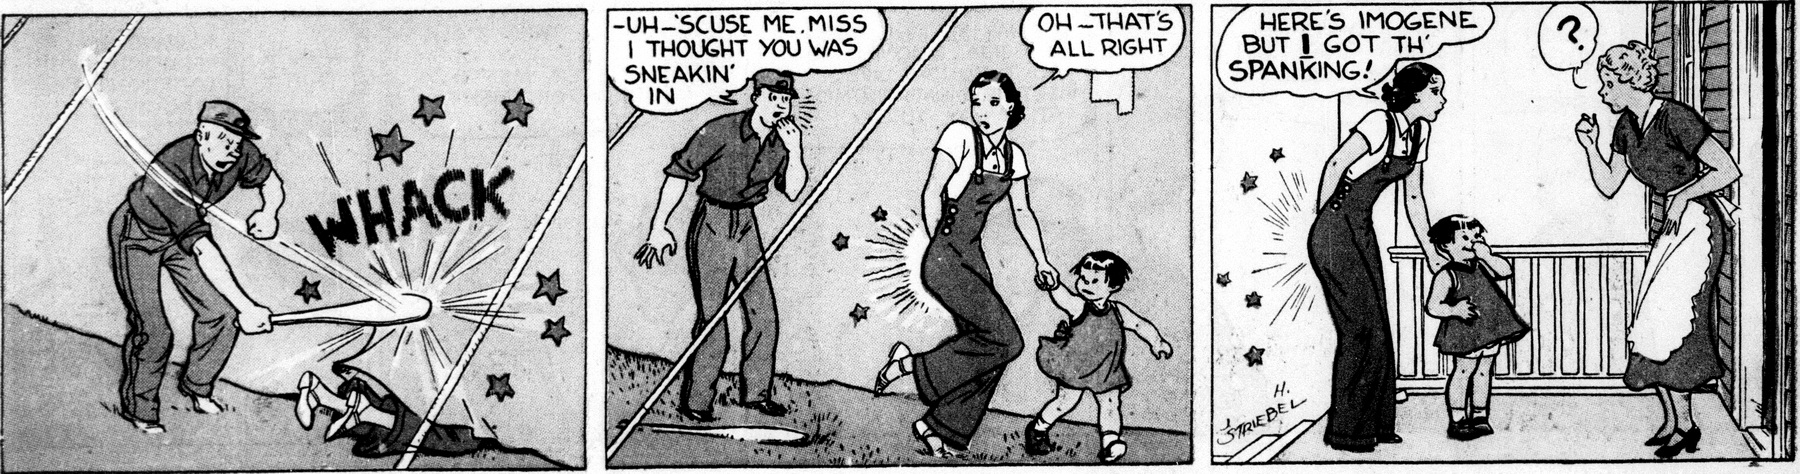 dixie dugan july 19, 1936 spanking panels